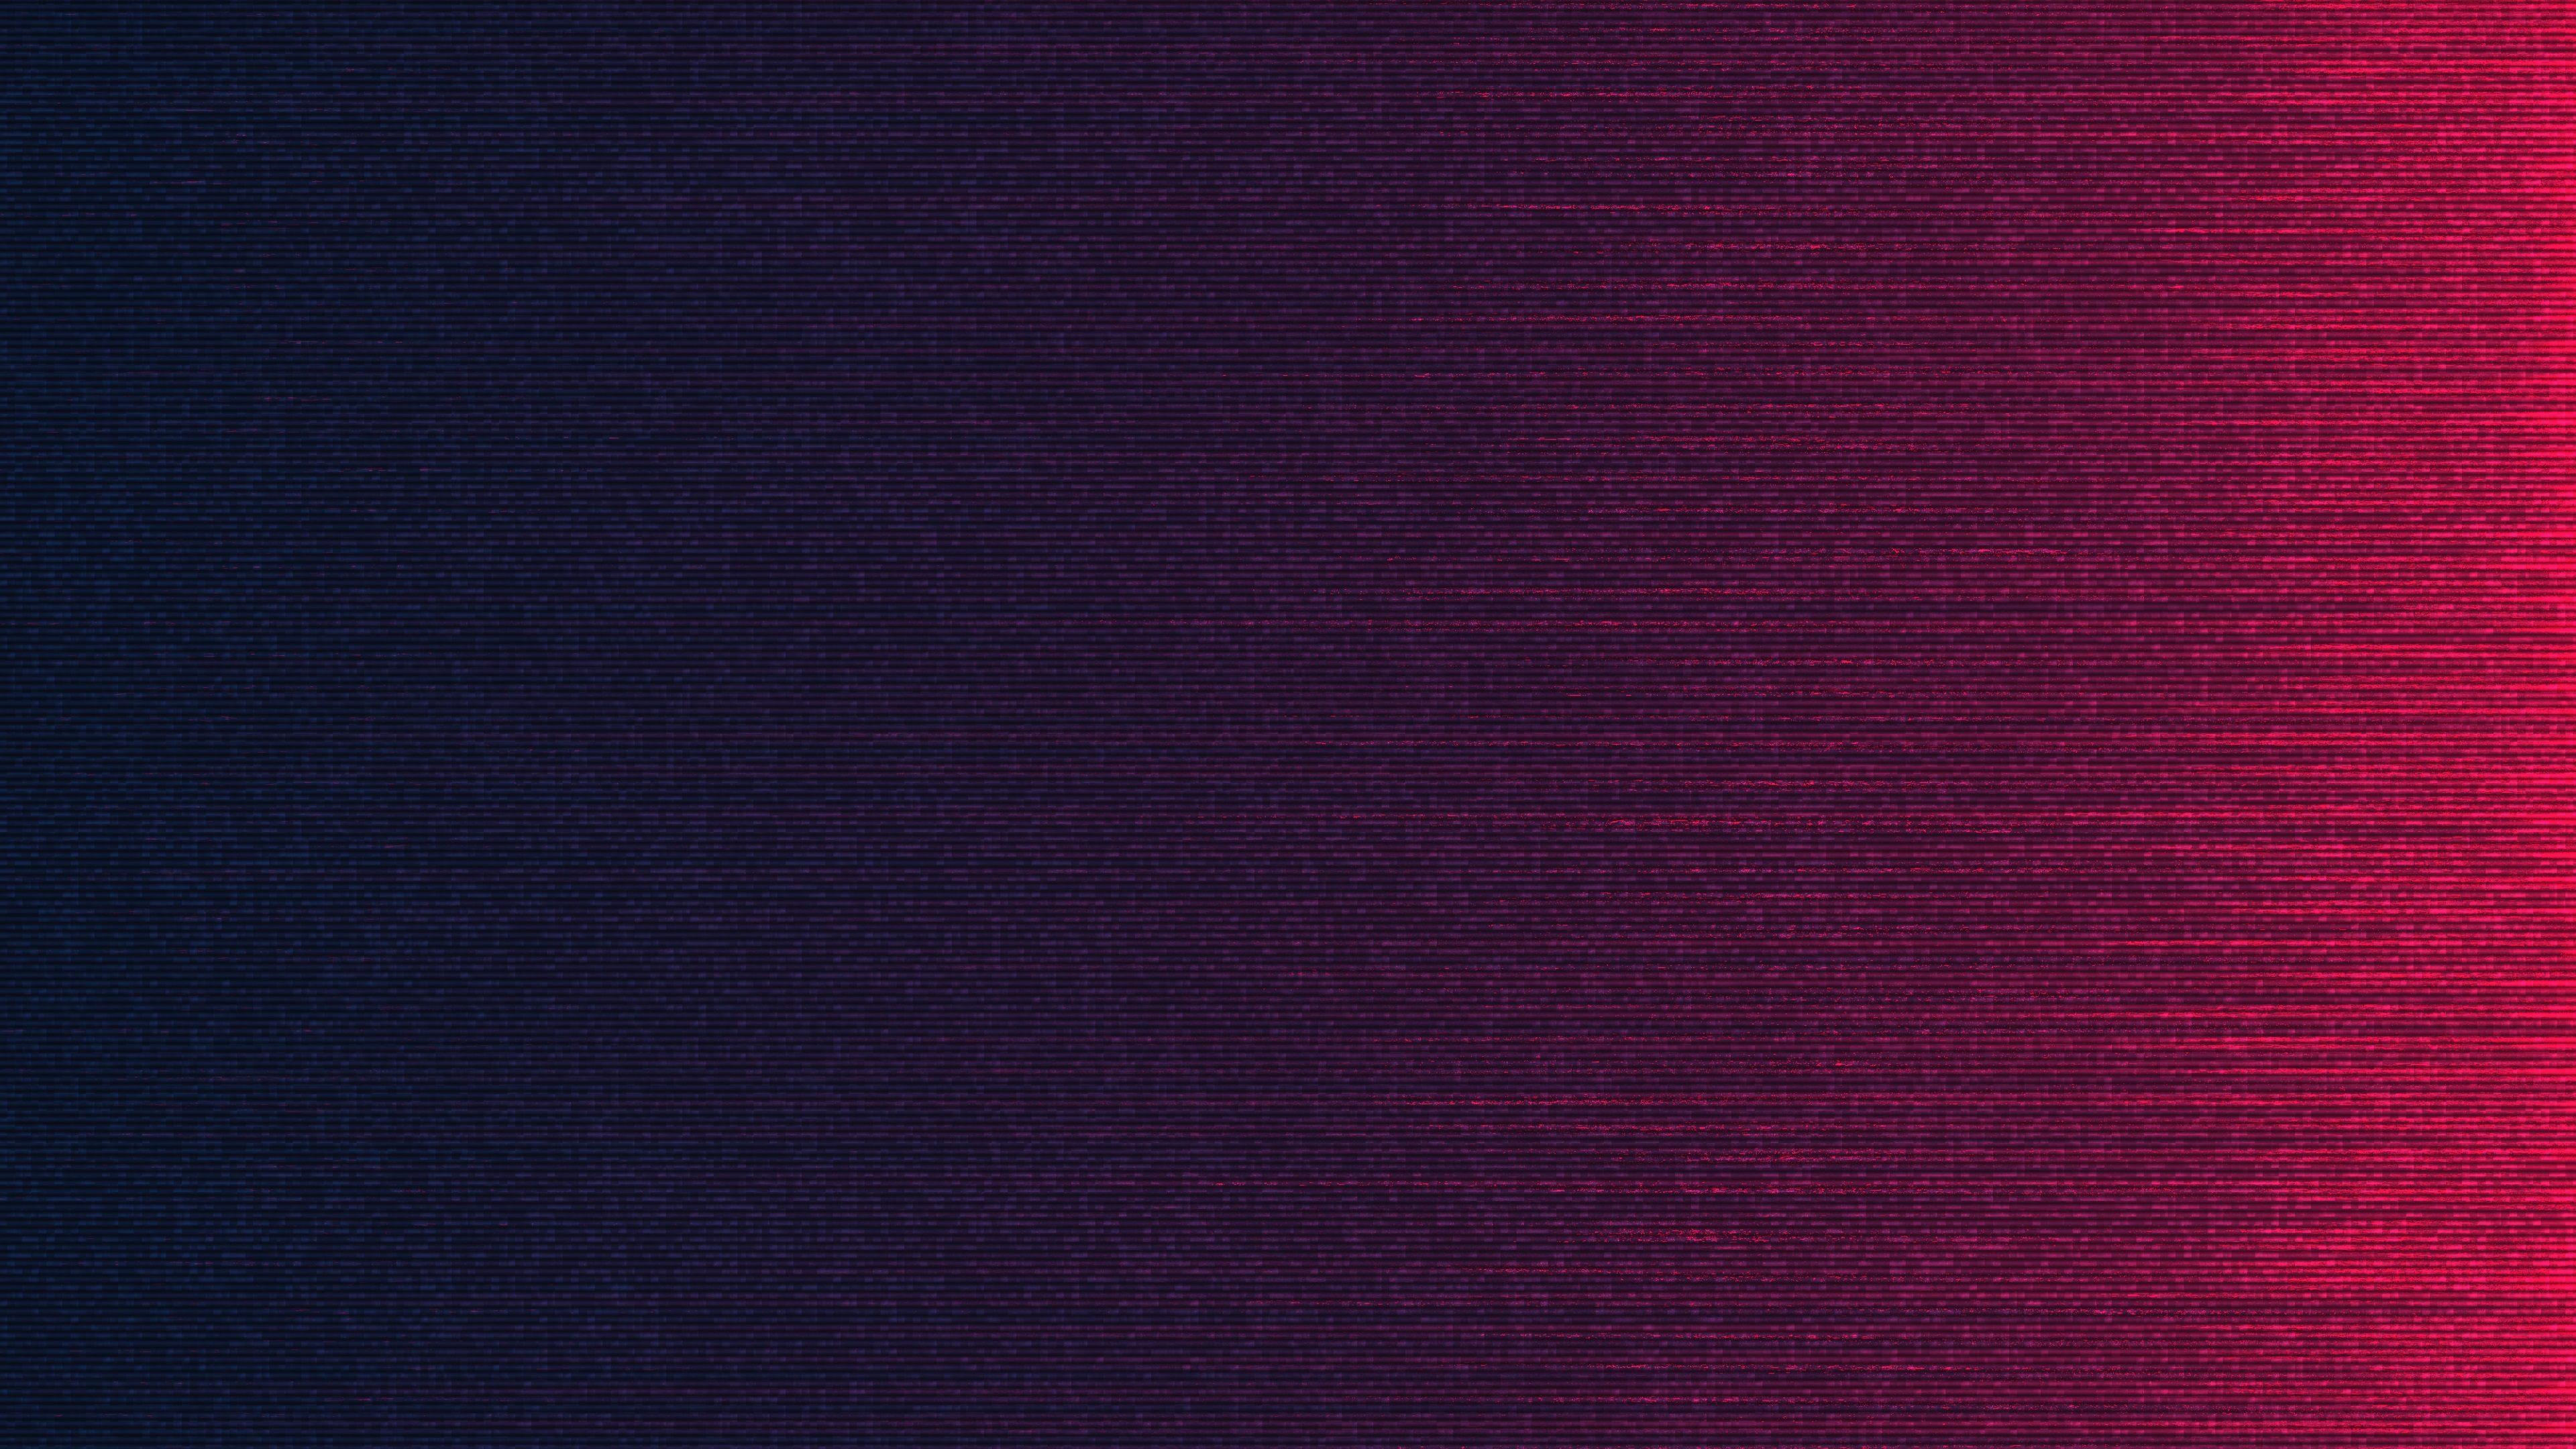 Gradient Glitch Art Pattern Texture Digital Abstract Grunge Noise Effects Scanlines 3840x2160